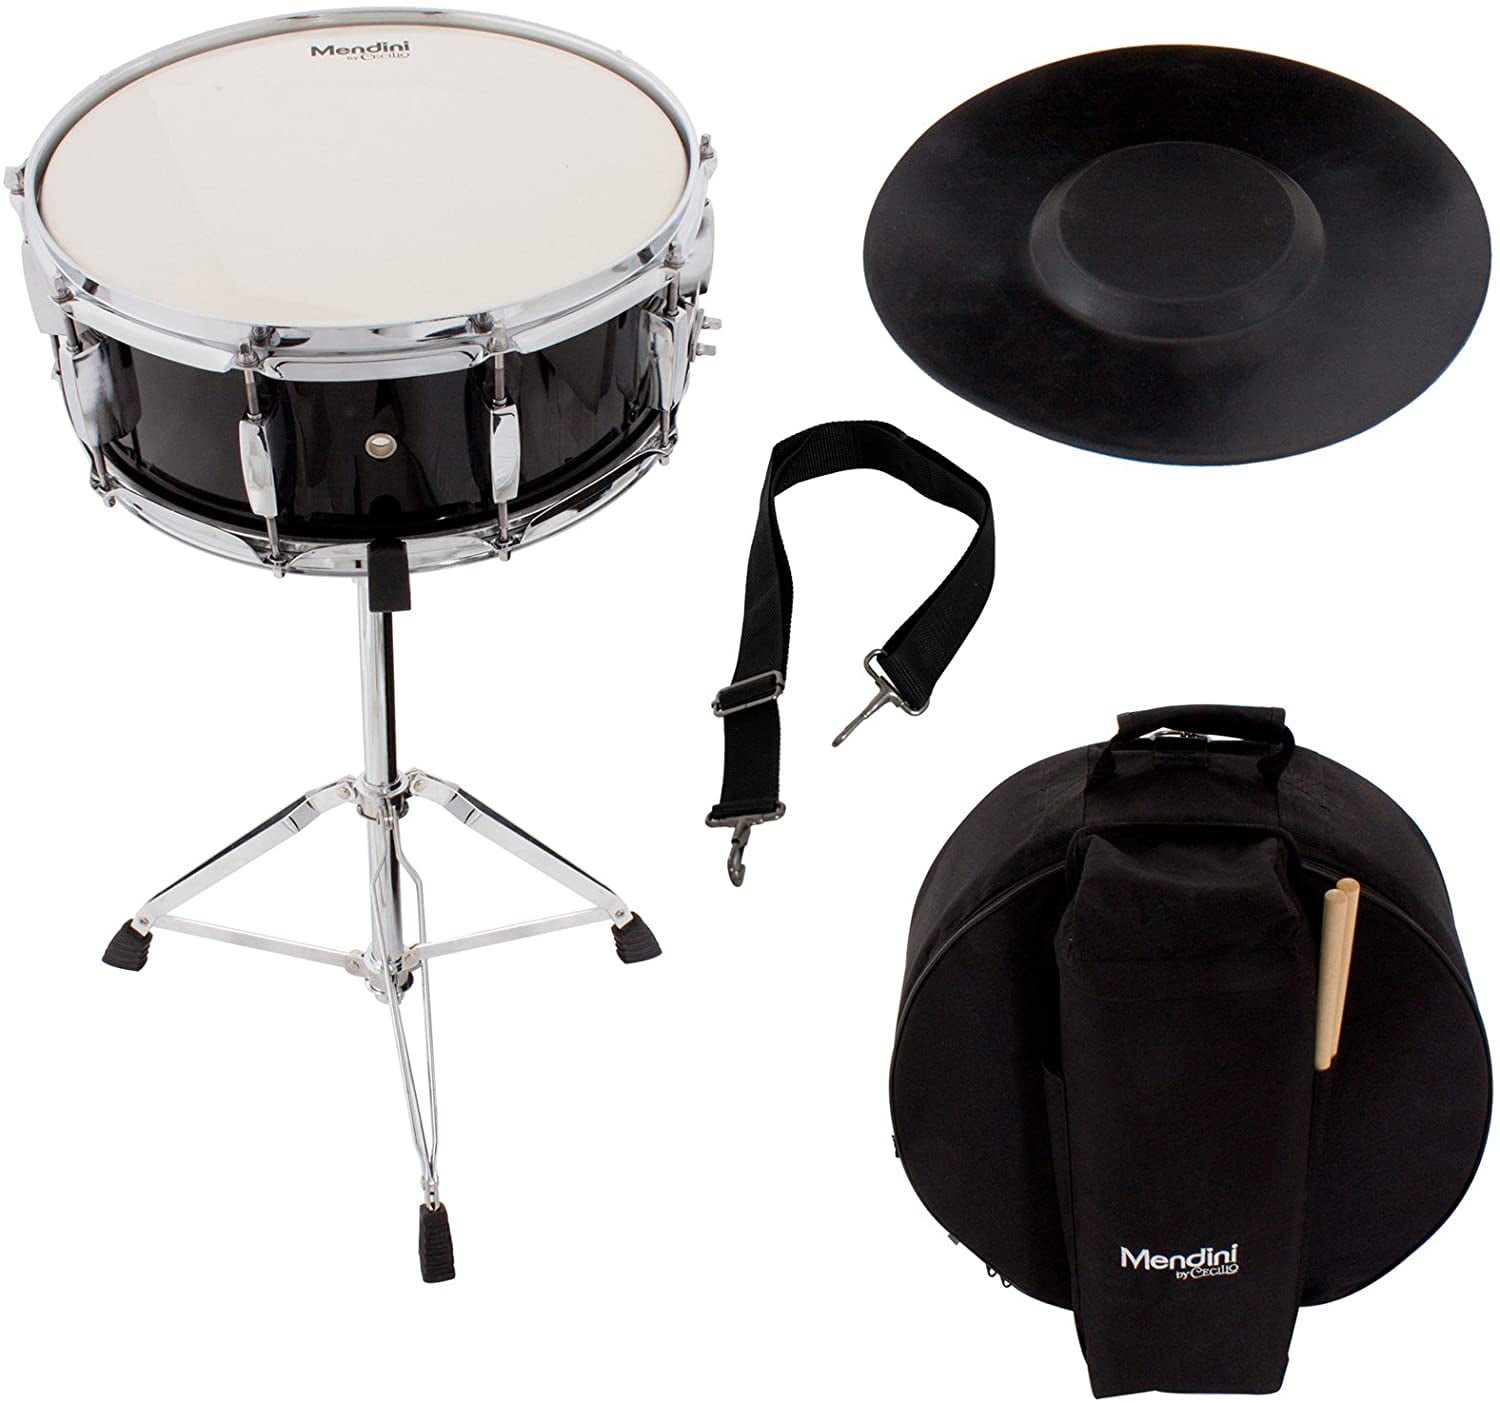 MSN-1455P-BK Mendini Student Snare Drum Set with Gig Bag Black Renewed Sticks Stand and Practice Pad Kit 